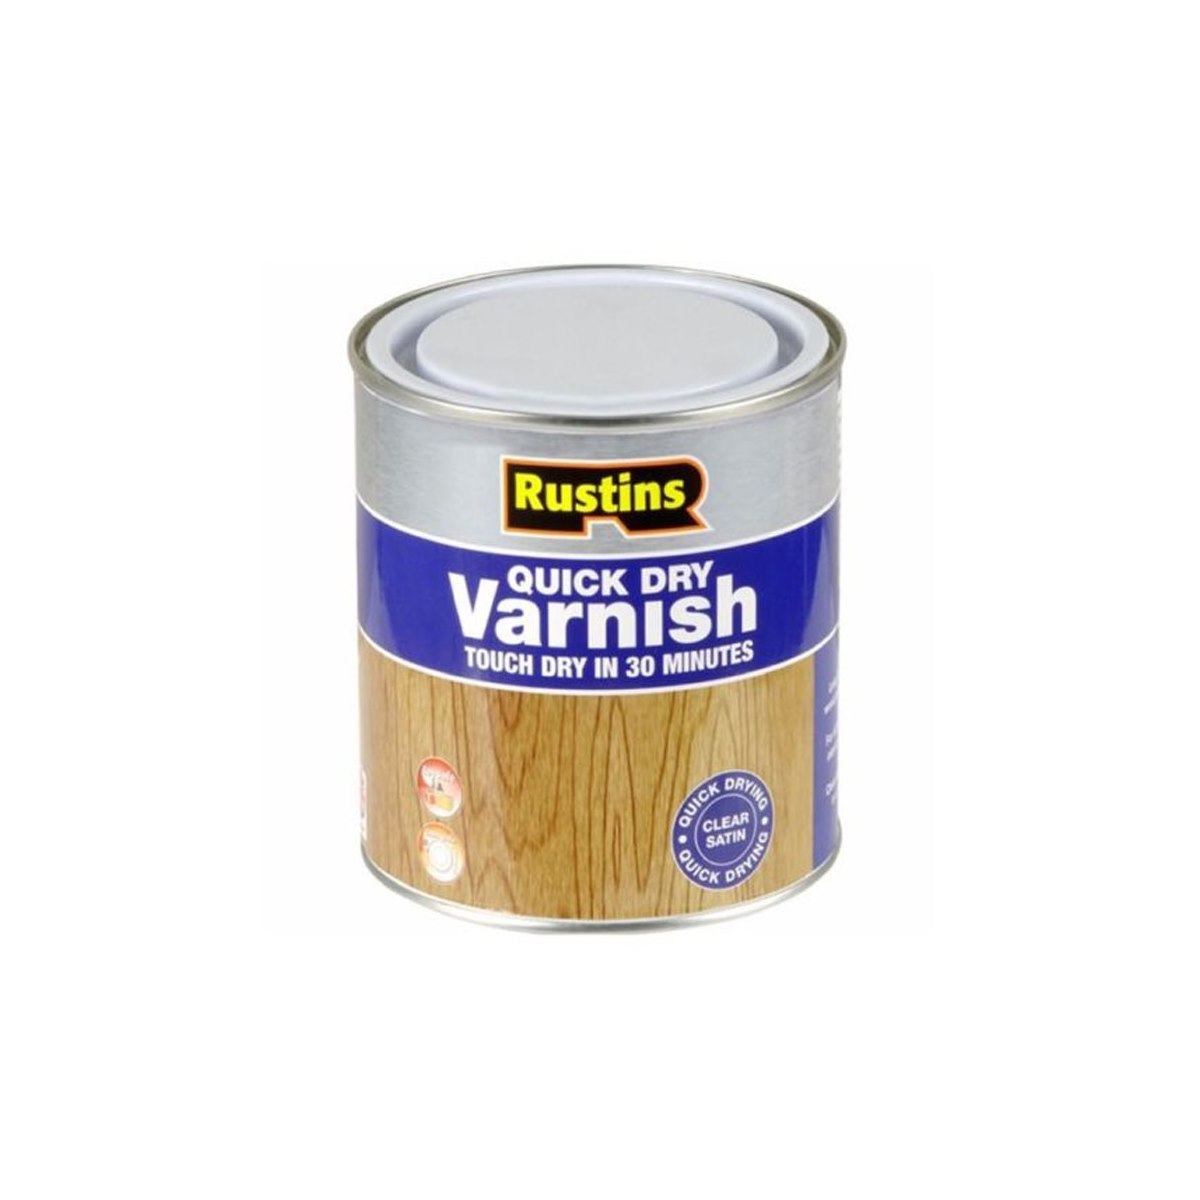 Rustins Quick Dry Varnish Satin Clear 5 Litre